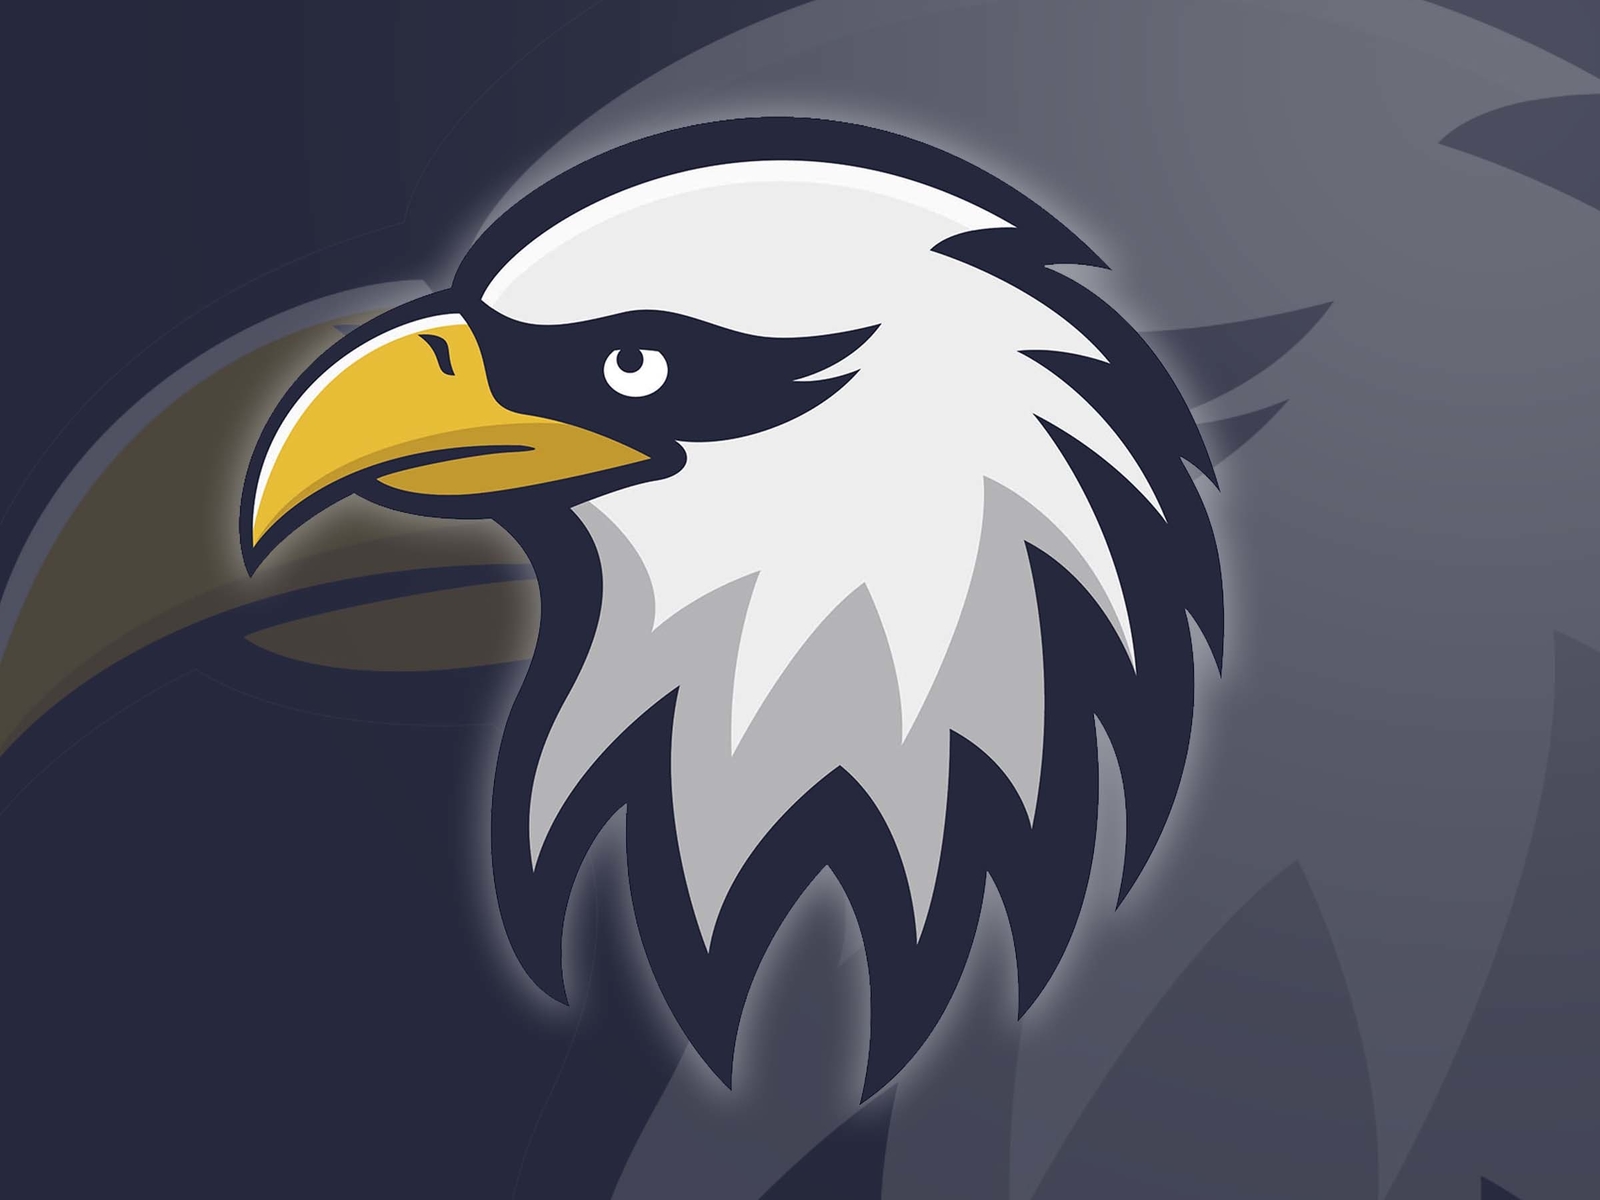 Изображение 256 пикселей. 256 На 256. Фото 256 на 256. Eagle logo 256x256. Лого Eagle на шапке.